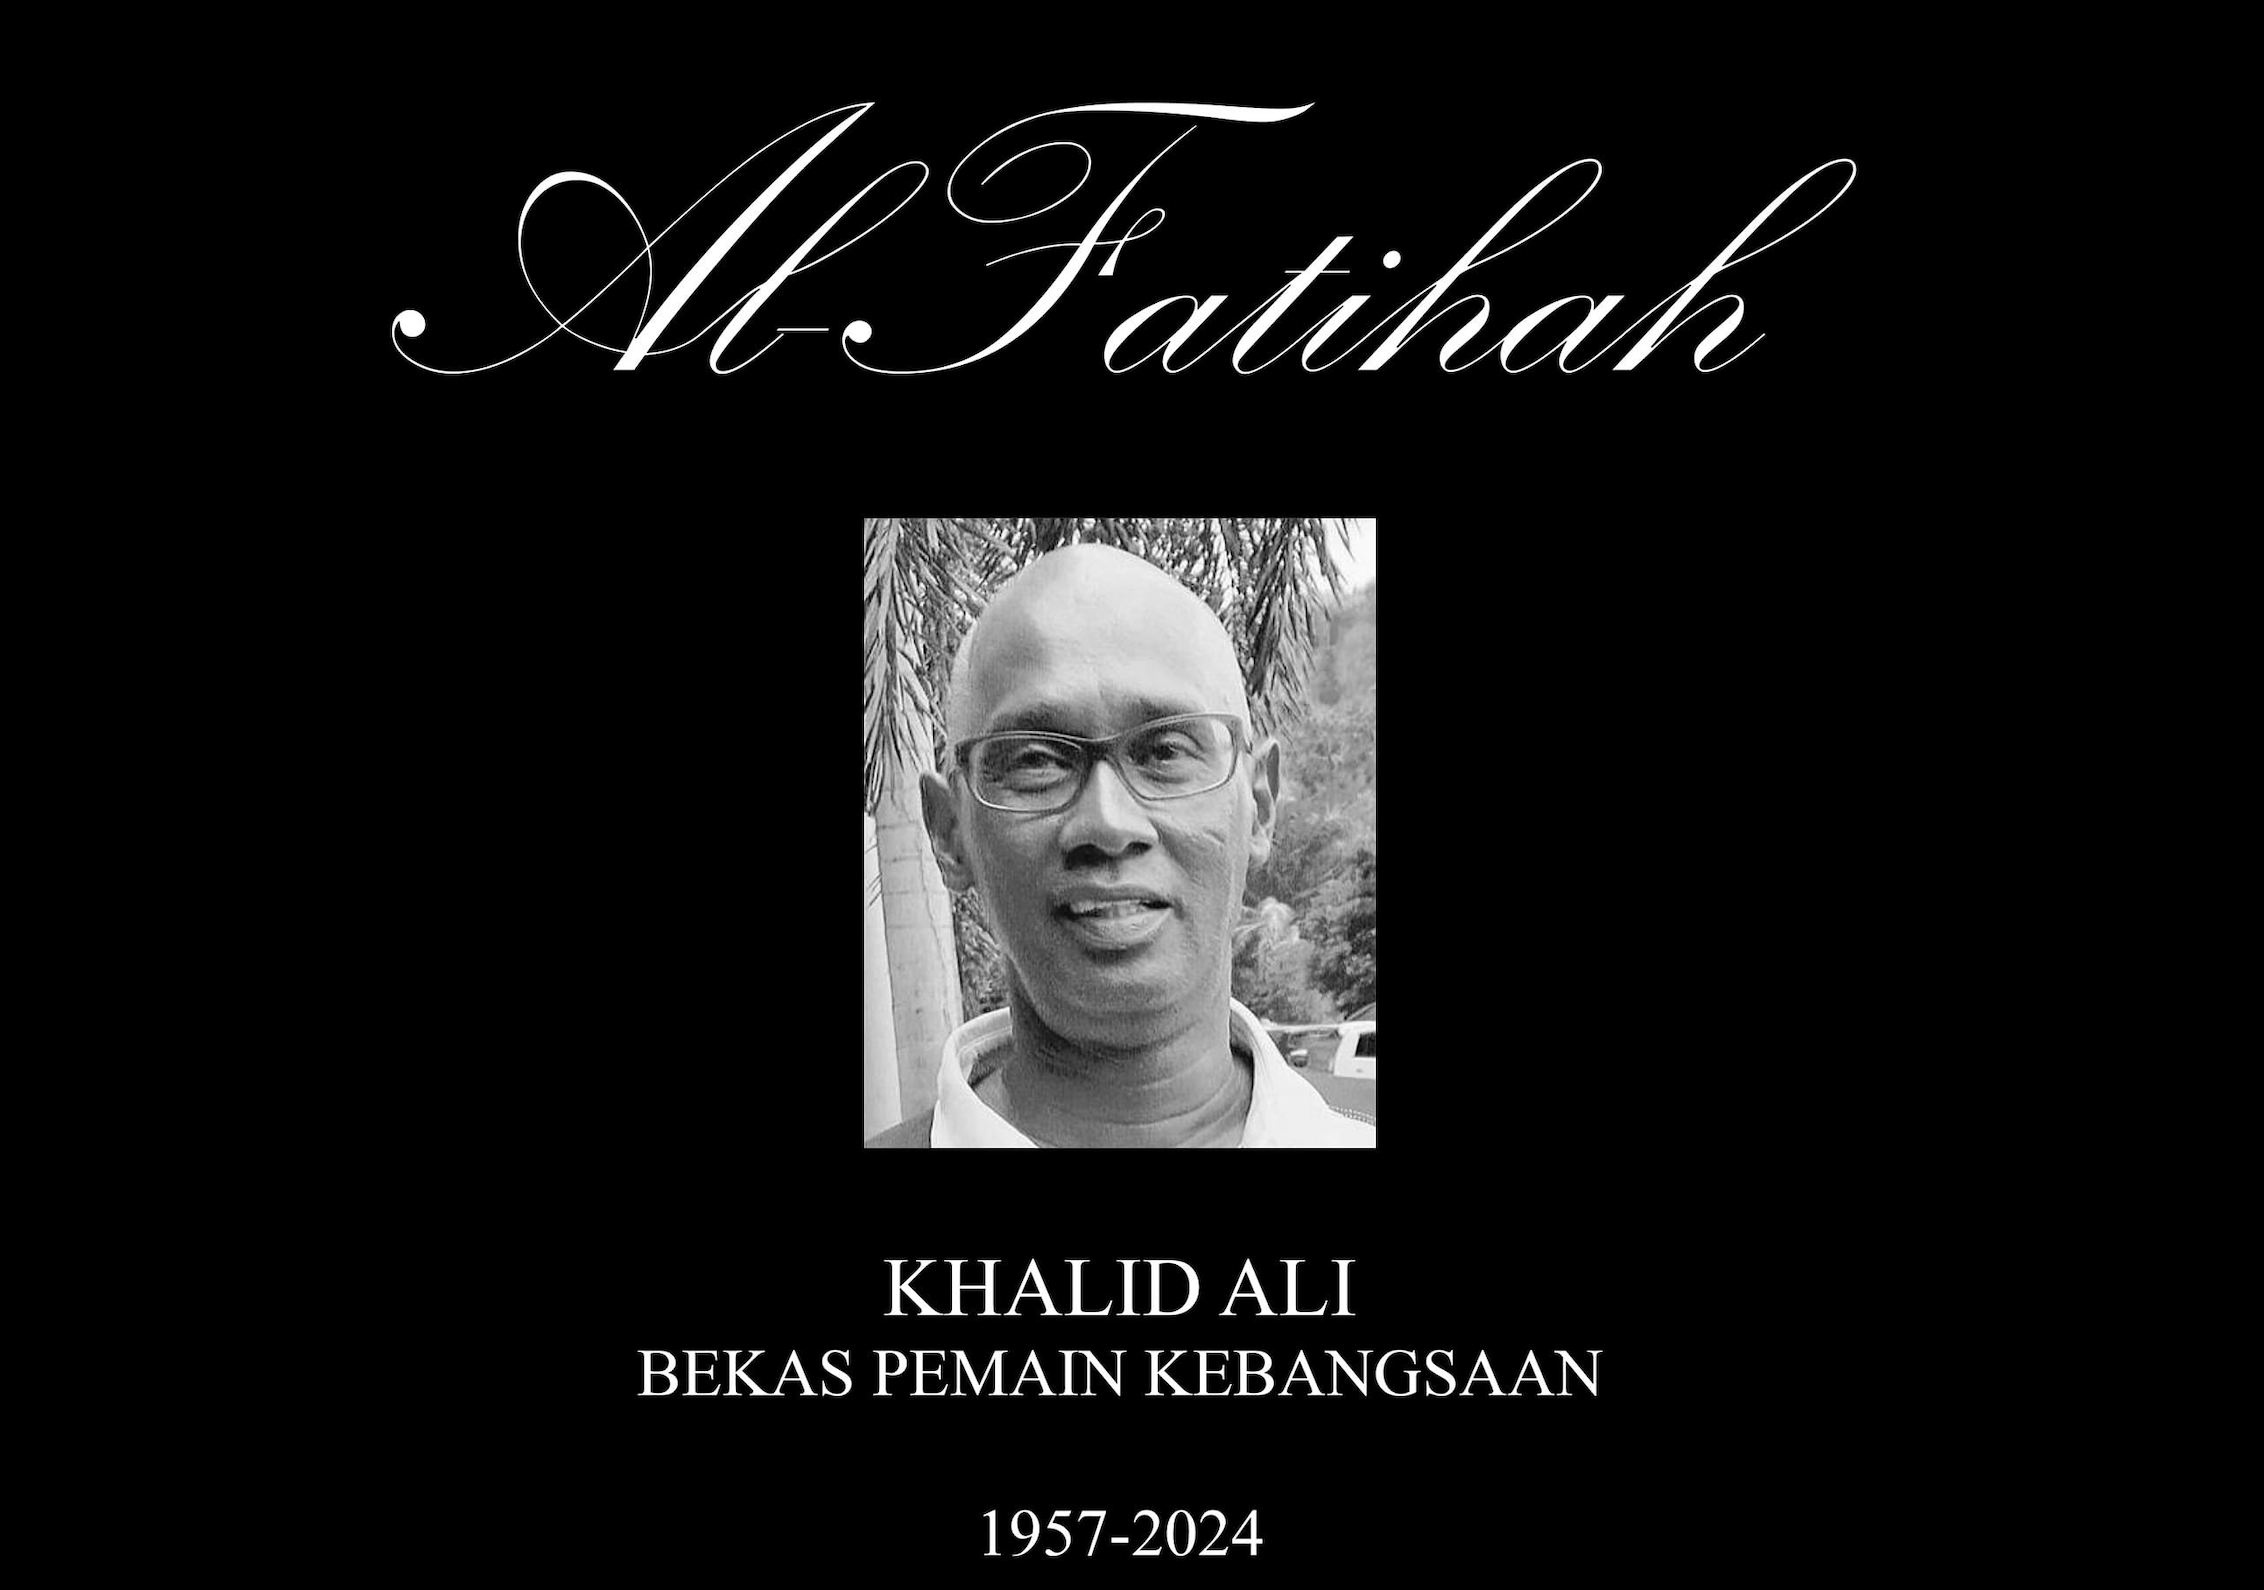 National football legend Khalid Ali dies at 66